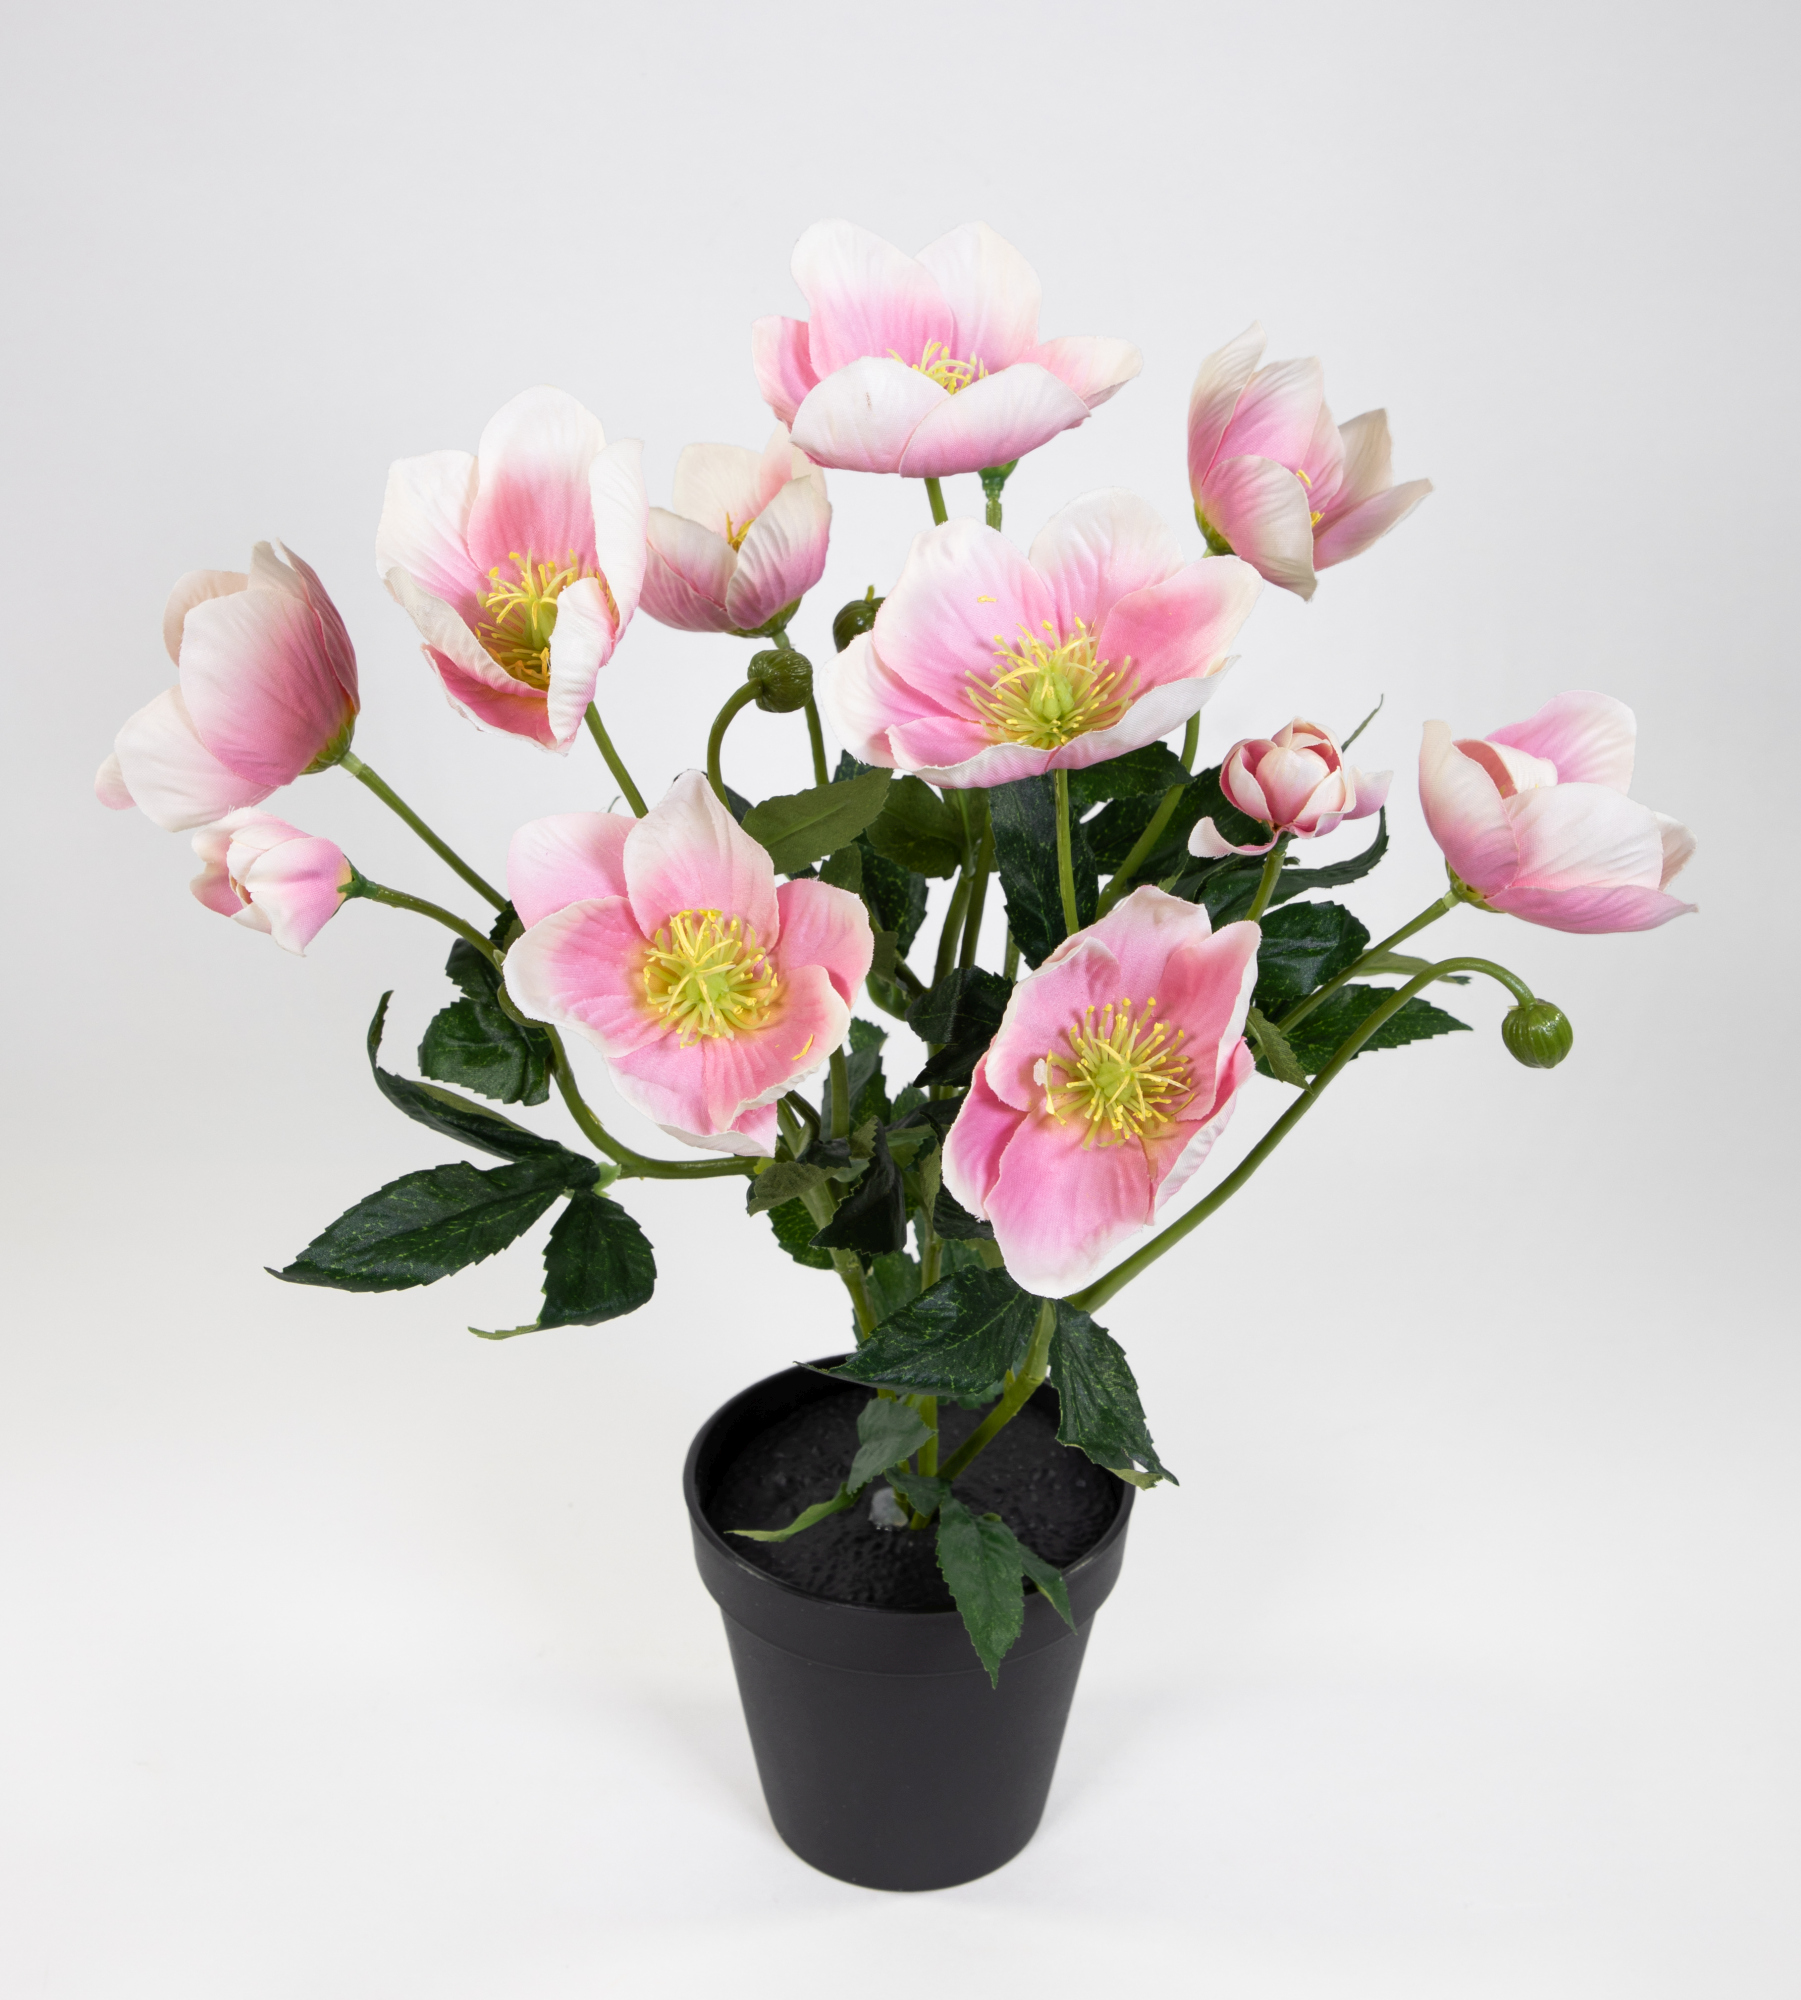 Christrosenbusch 36cm hellrosa im Topf PM Kunstblumen künstliche Christrose  Blumen Kunstblumen